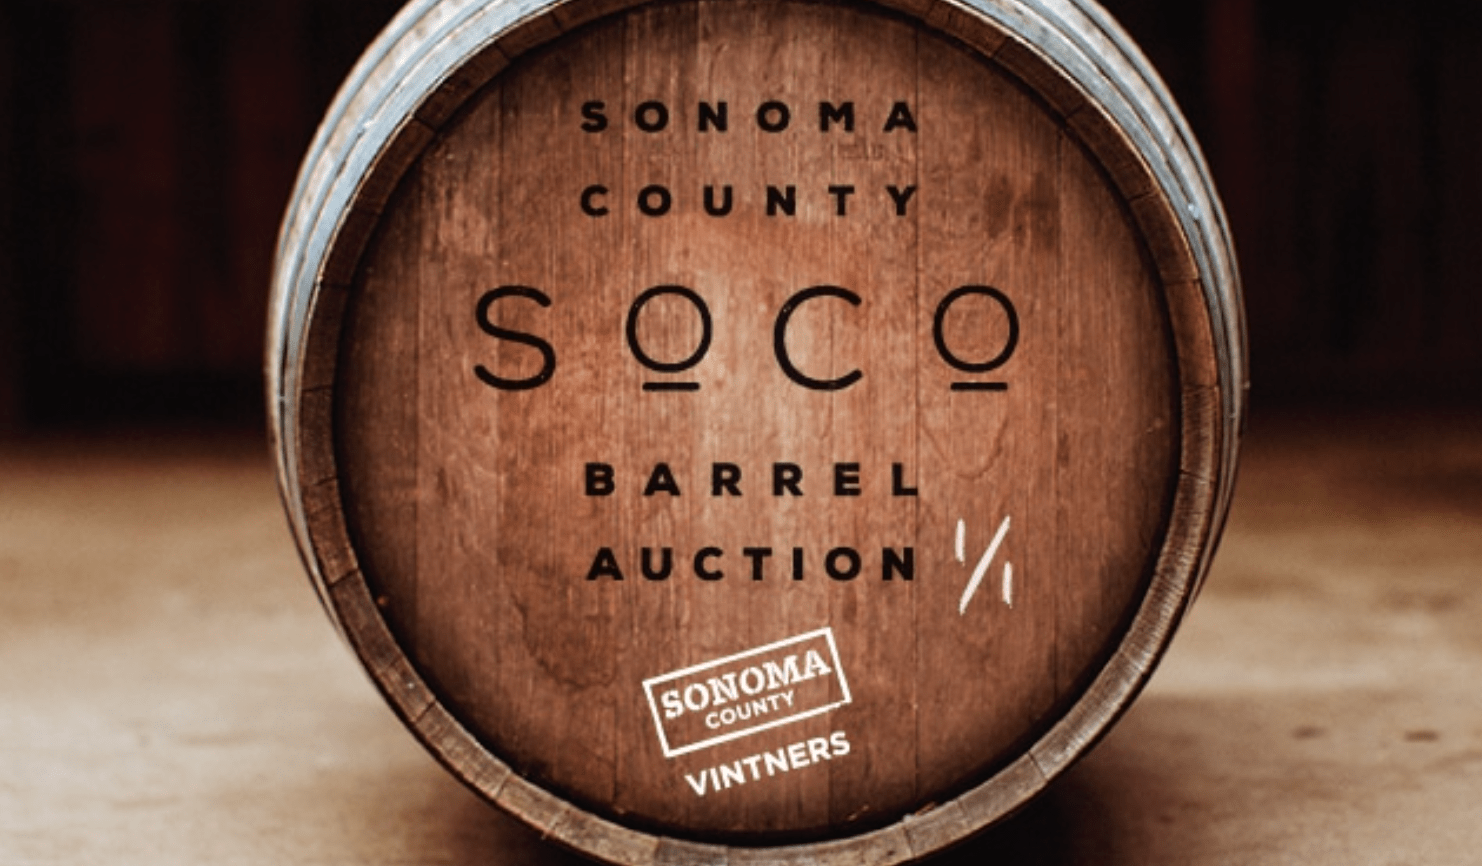 Sonoma Barrel Auction 